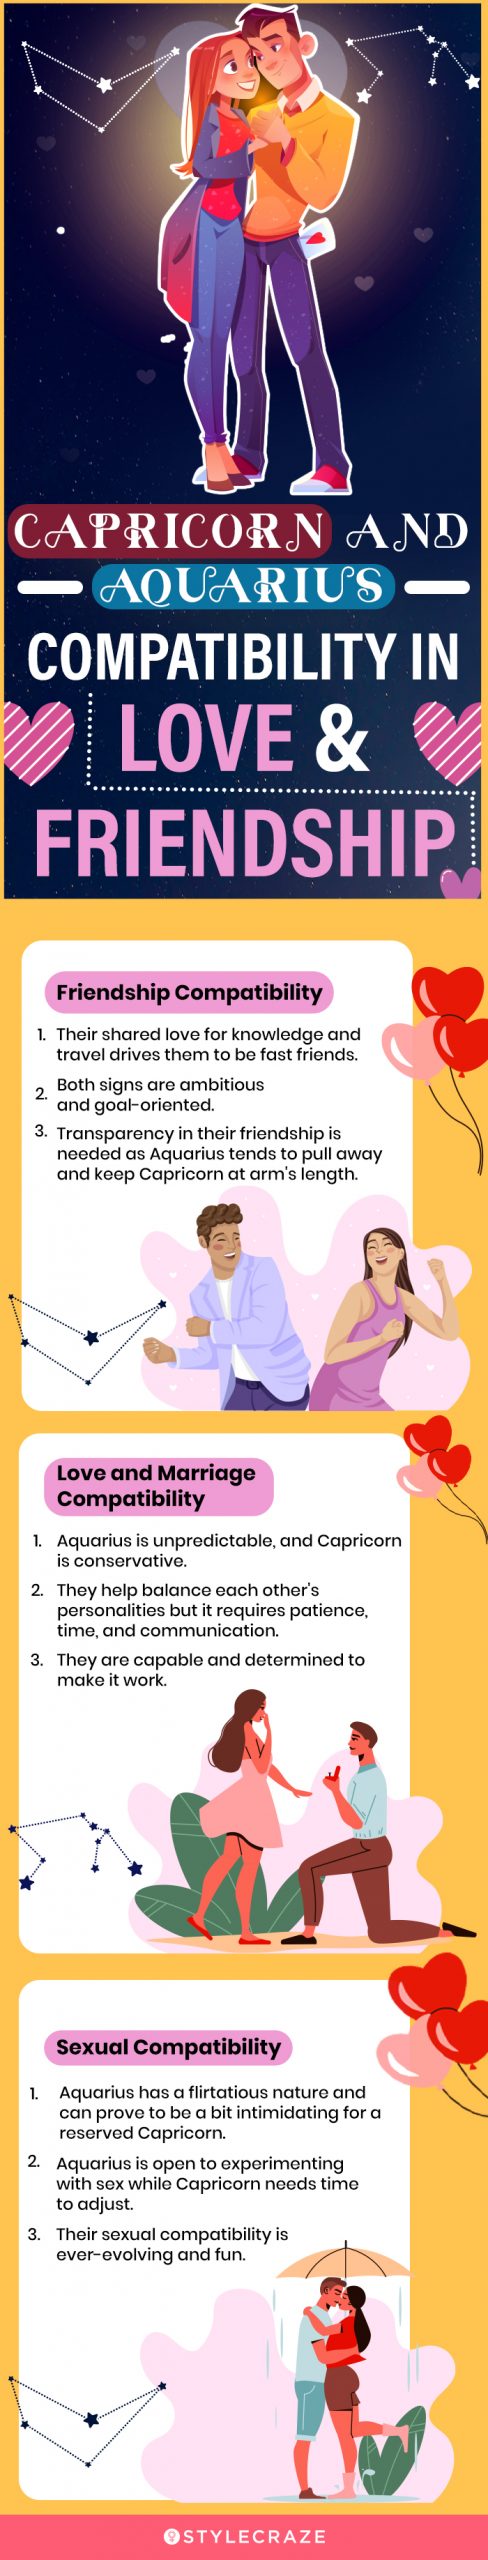 capricorn and aquarius compatibility in love & friendship [infographic]